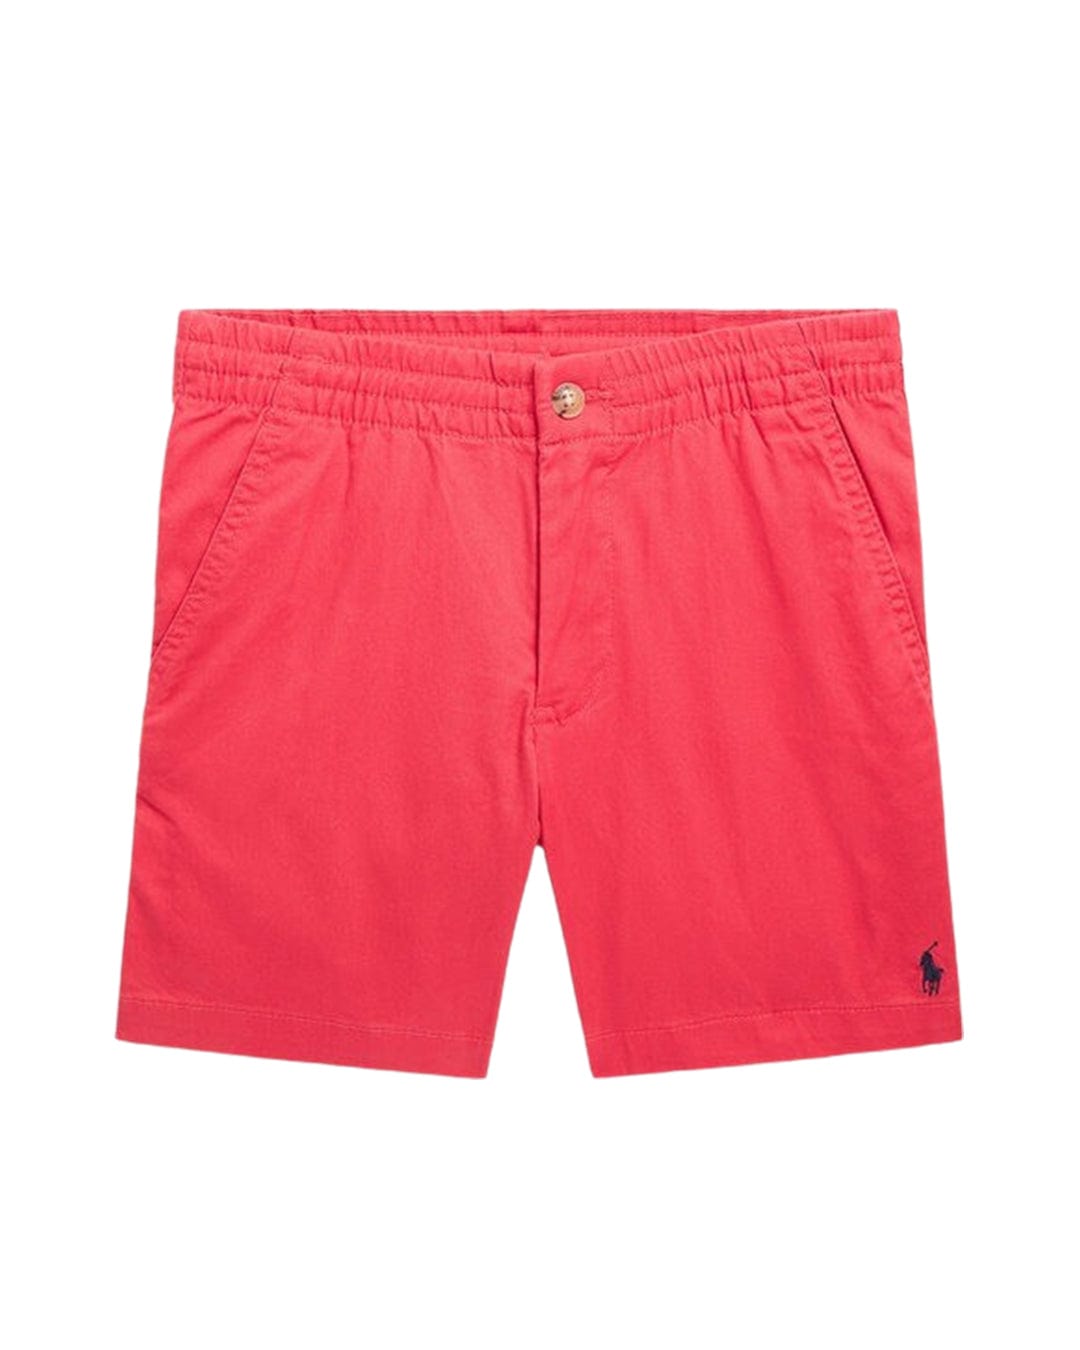 Polo Ralph Lauren Shorts Boys Polo Ralph Lauren Prepster Flat Front Red Shorts